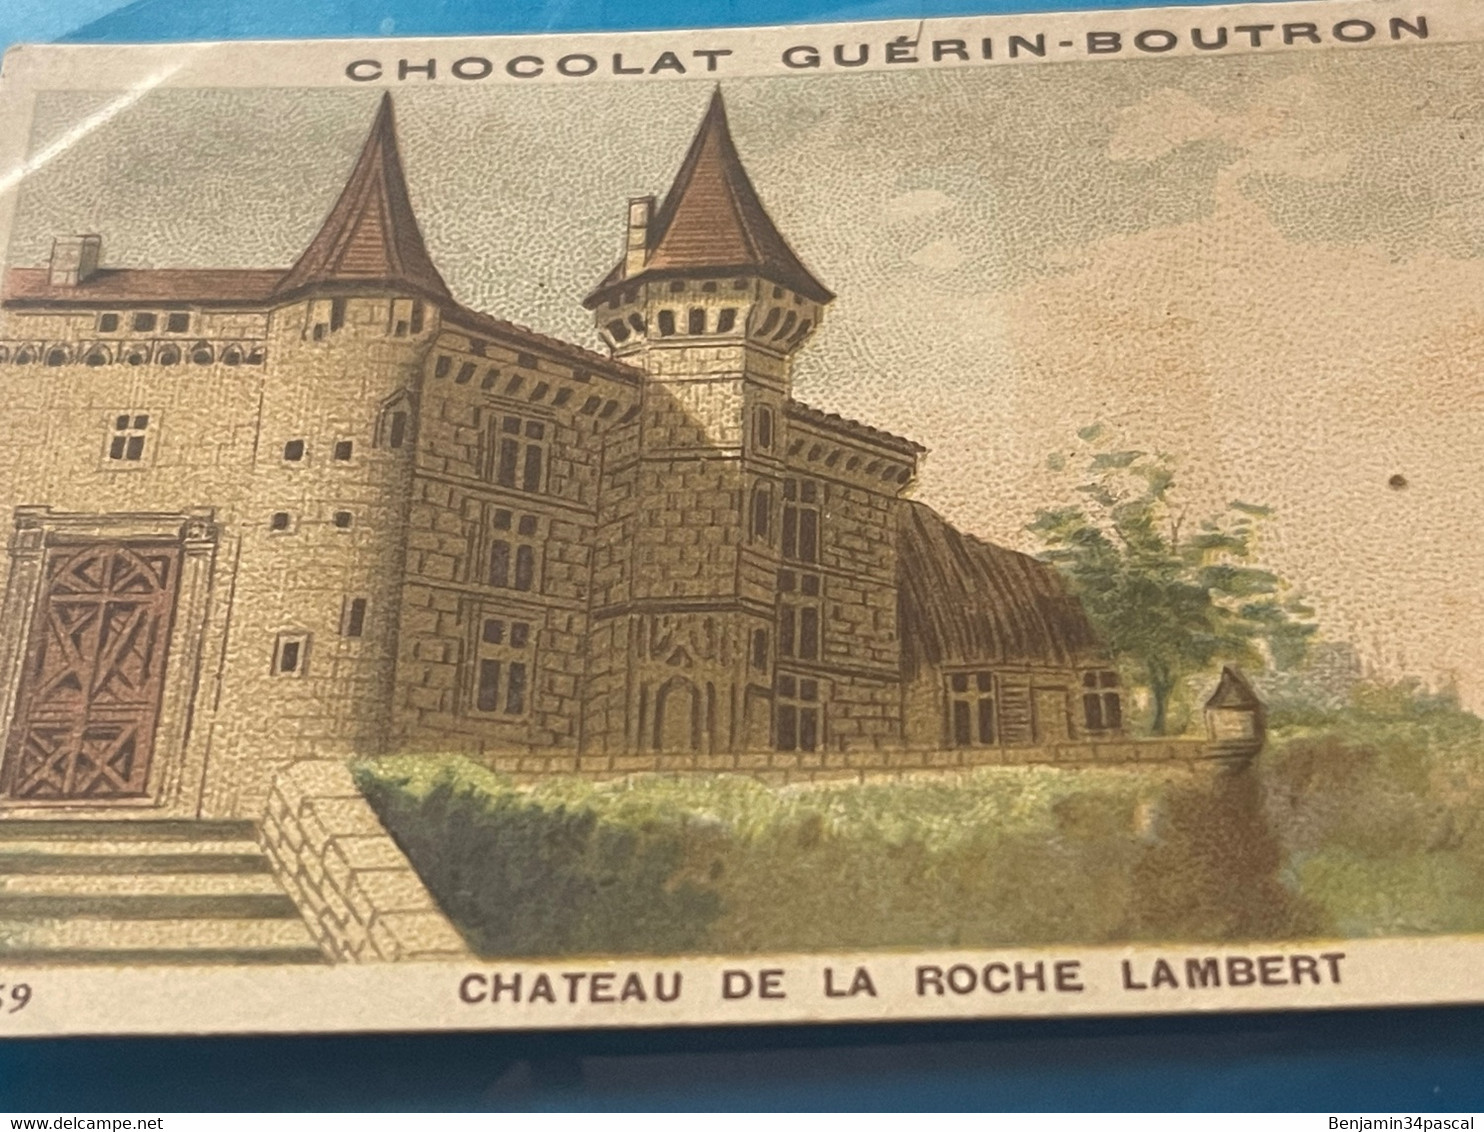 Chocolat GUÉRIN-BOUTRON Image -Chromo Ancienne - Château De La Roche Lambert - Chocolat